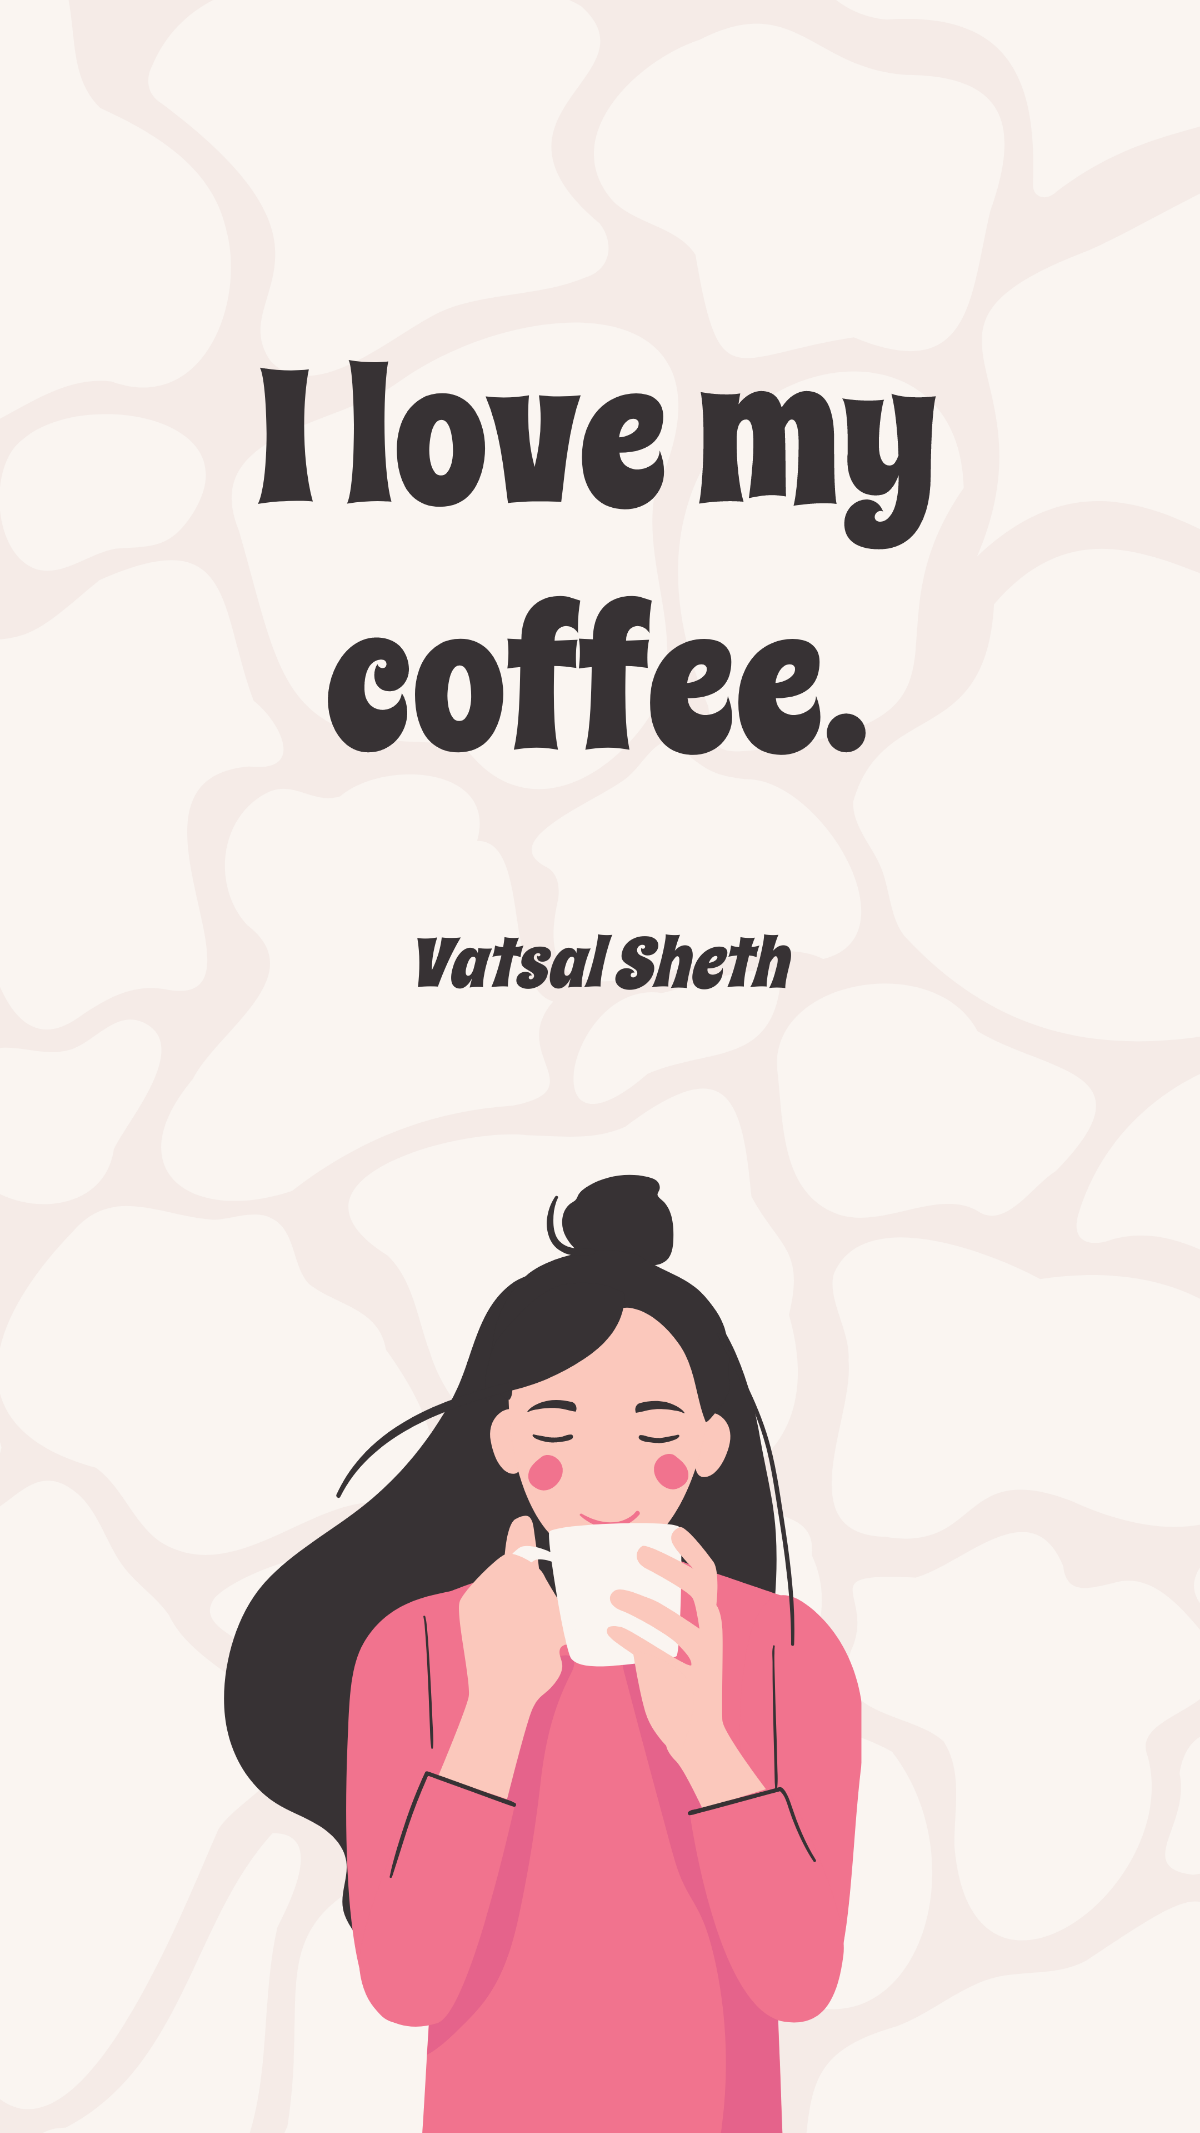 Vatsal Sheth - I love my coffee.